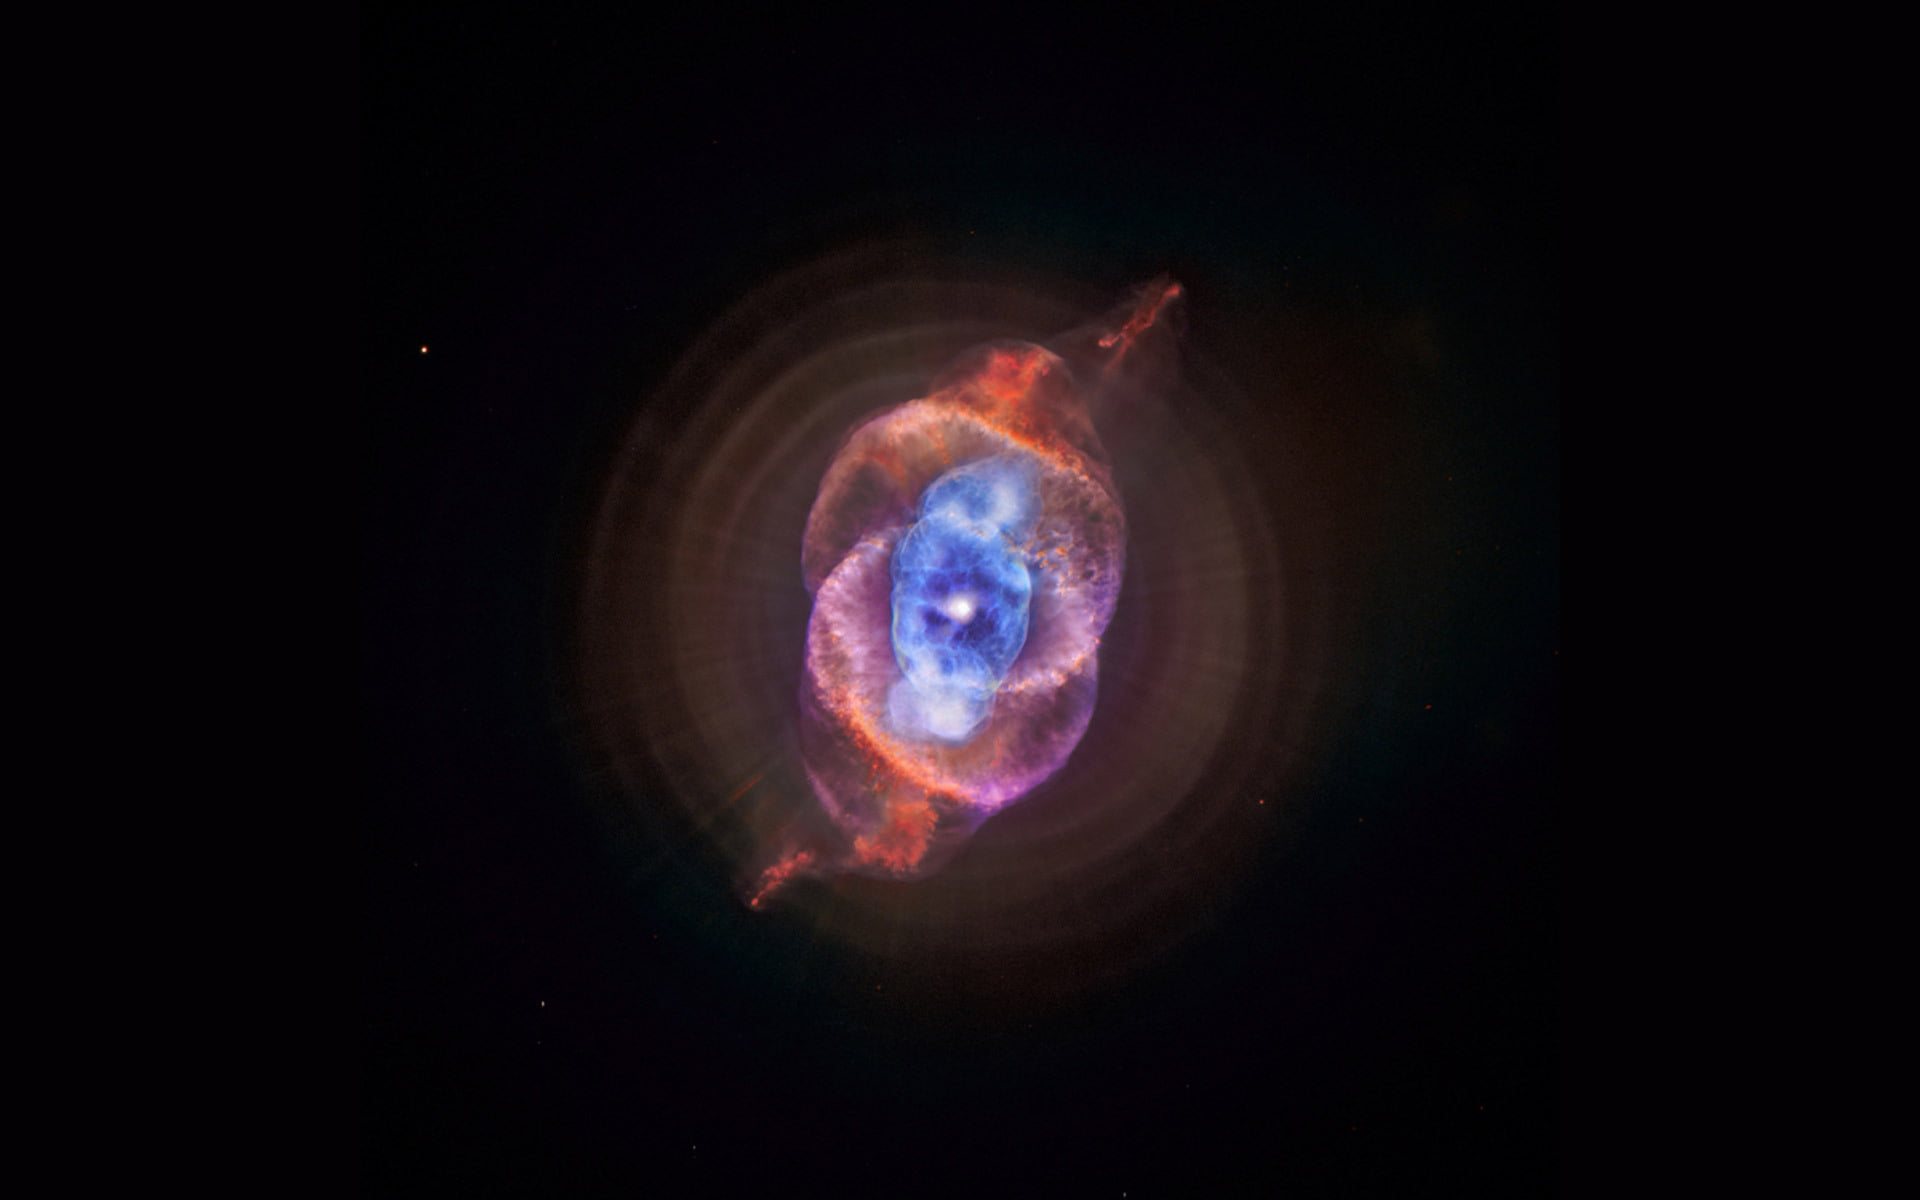 cat's eye nebula wallpaper, ngc 6543, space, astronomy, star - space